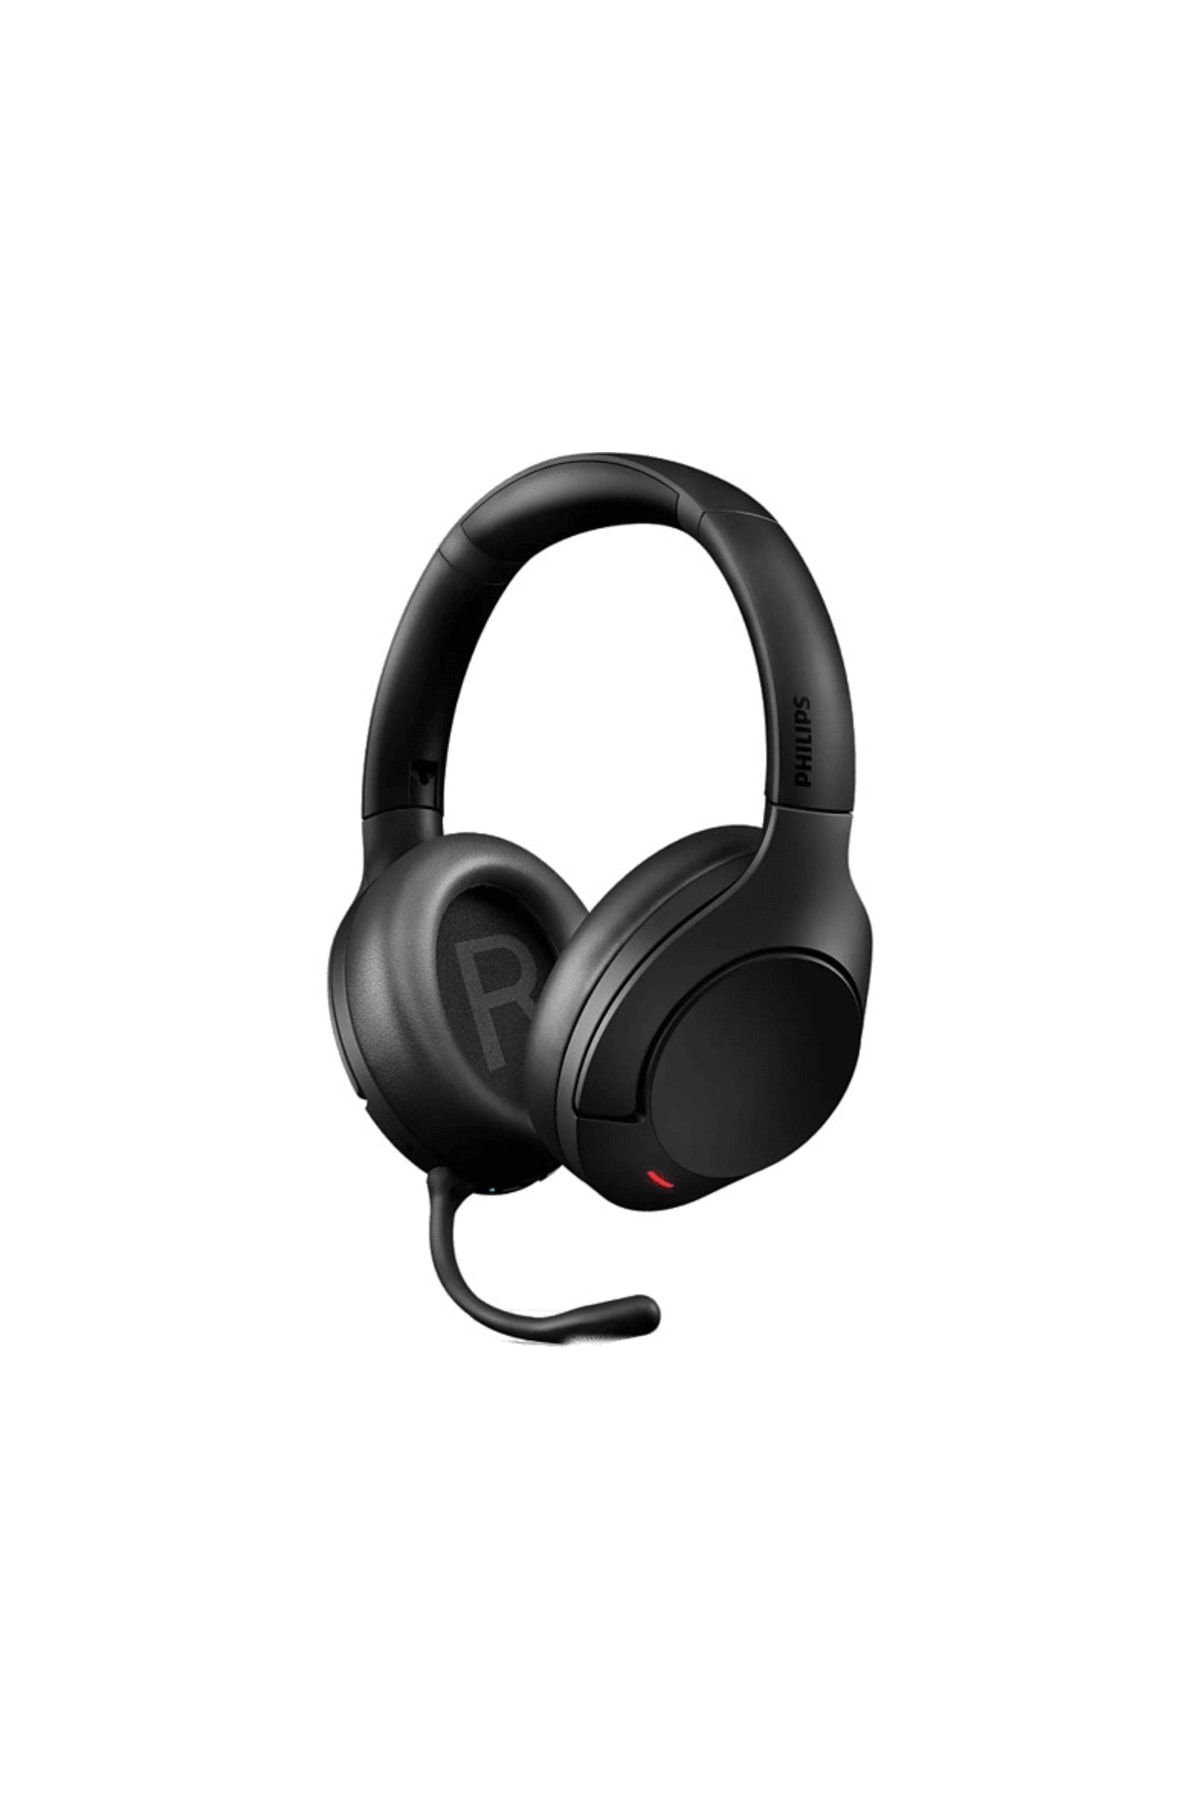 Philips Tah8507bk Anc Pro Mikrofonlu Kulak Üstü Bluetooth Kulaklık Siyah